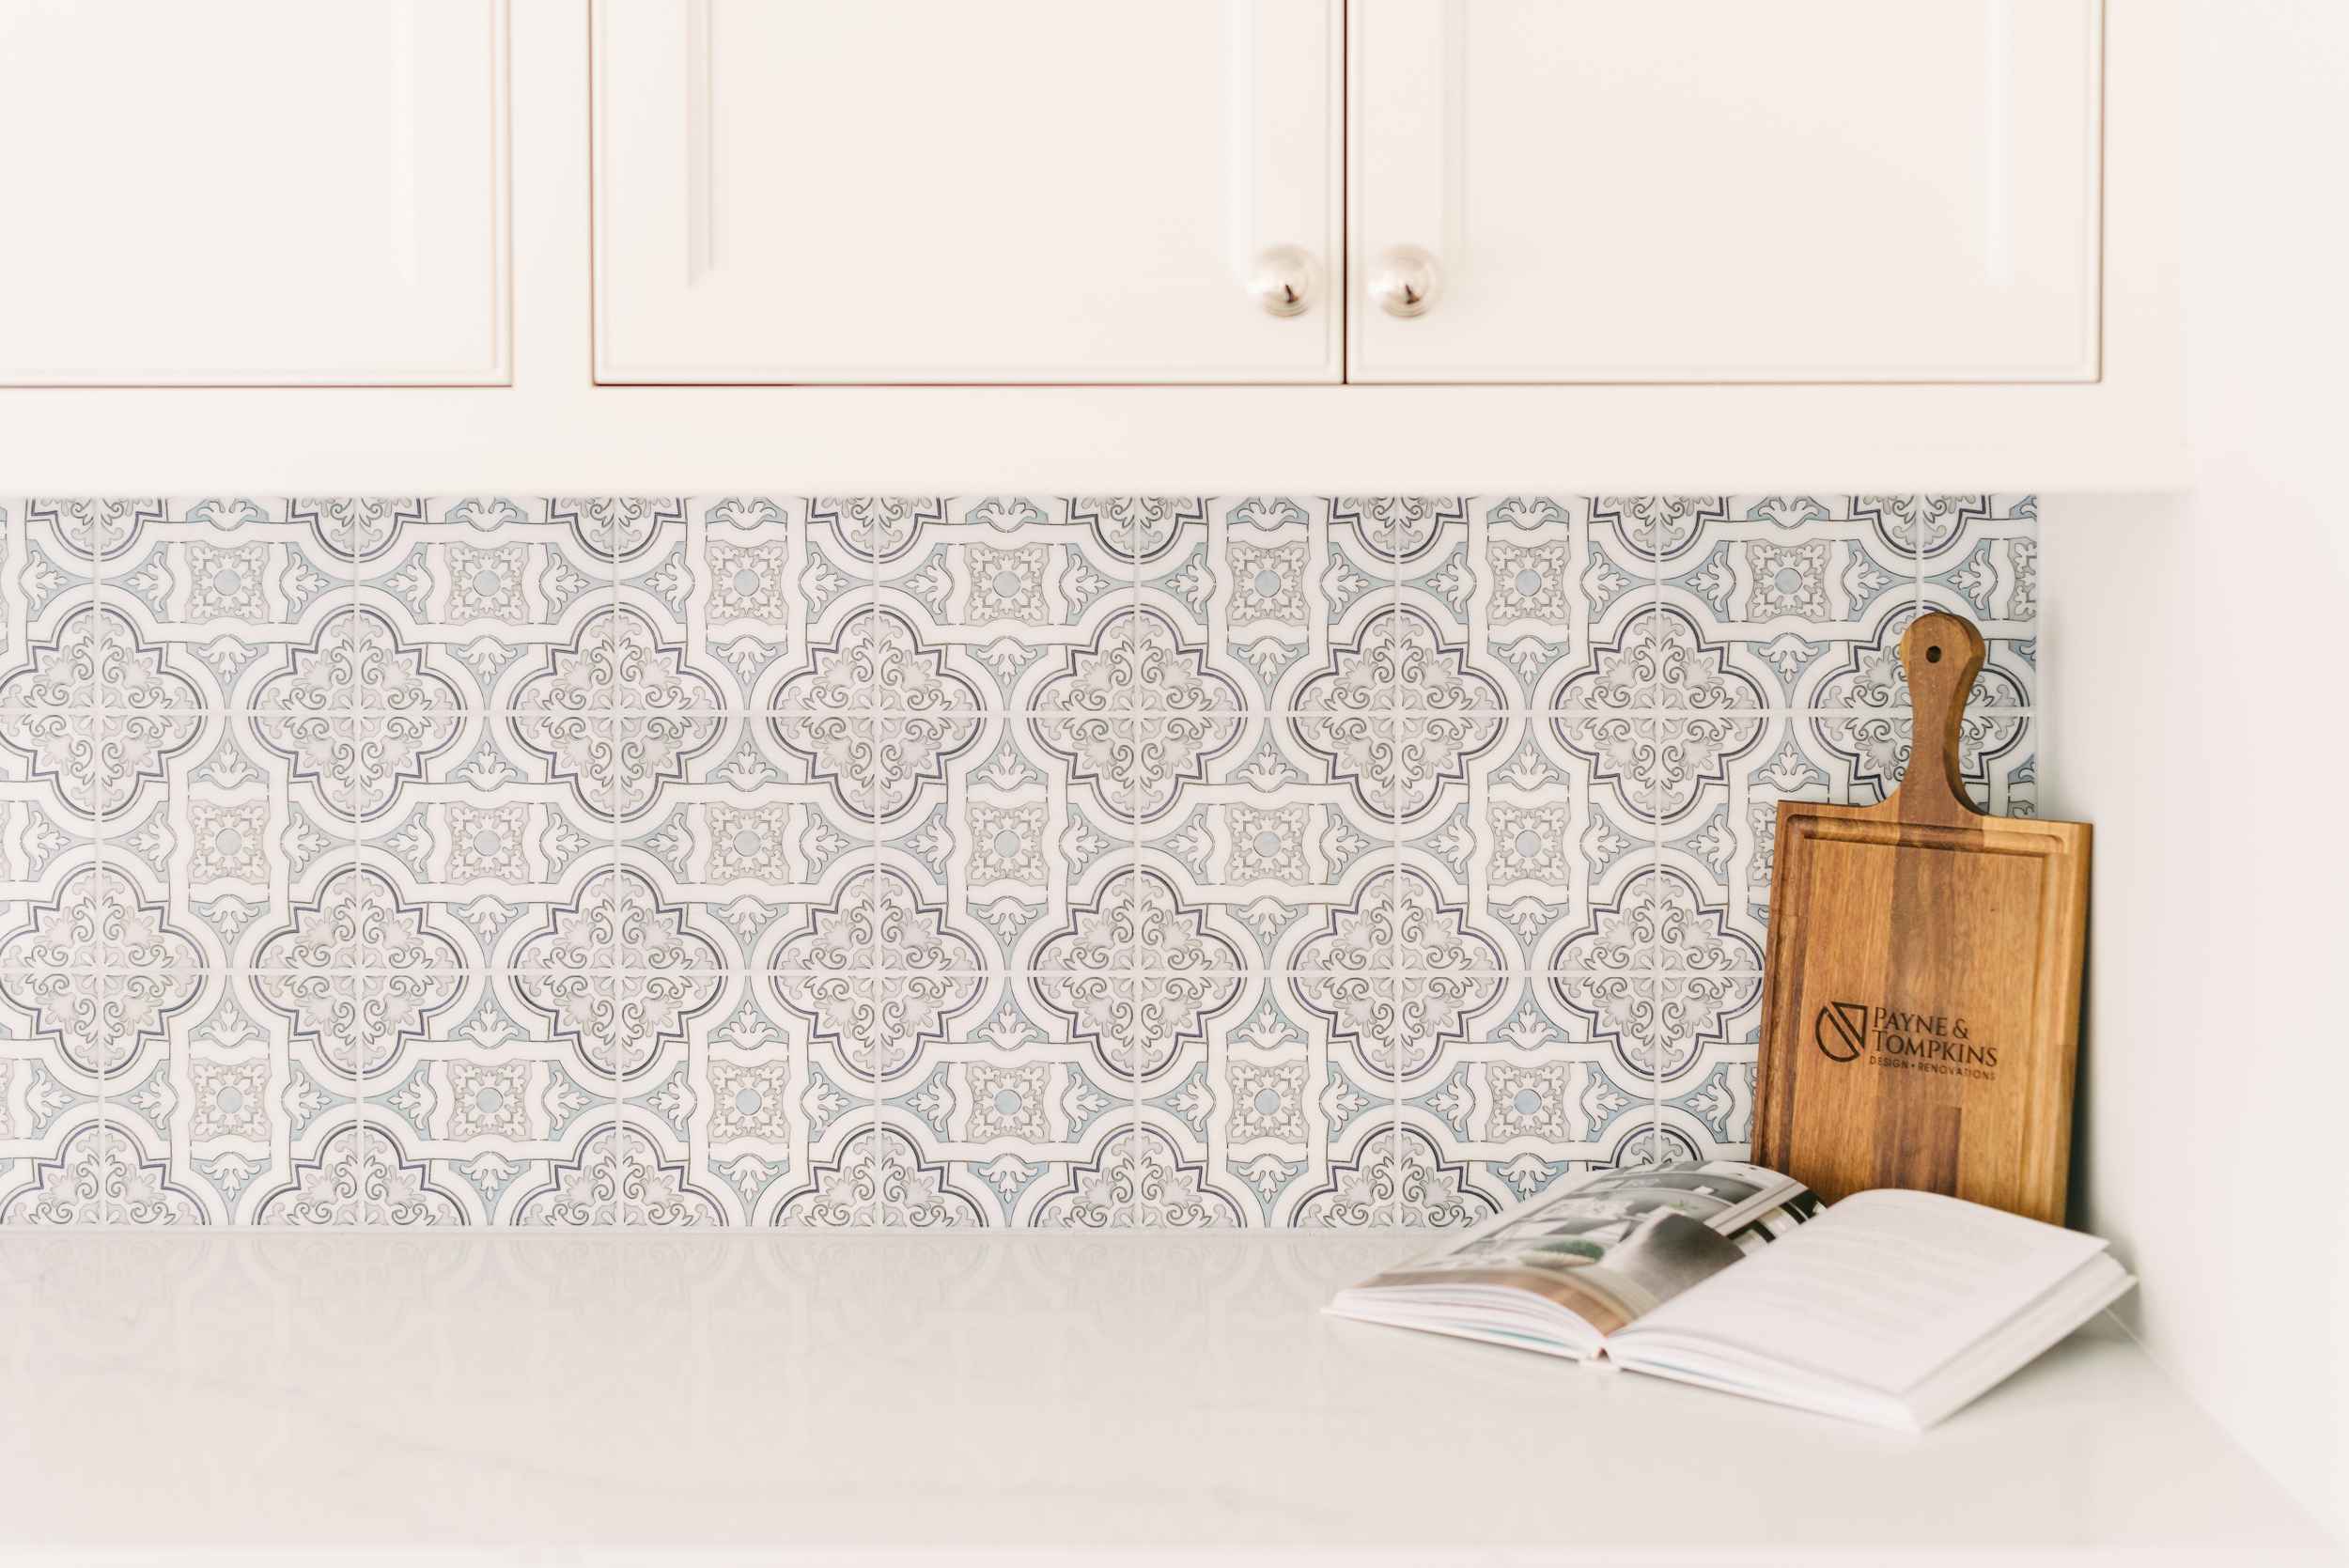 Pattern tile back splash kitchen renovation ohio